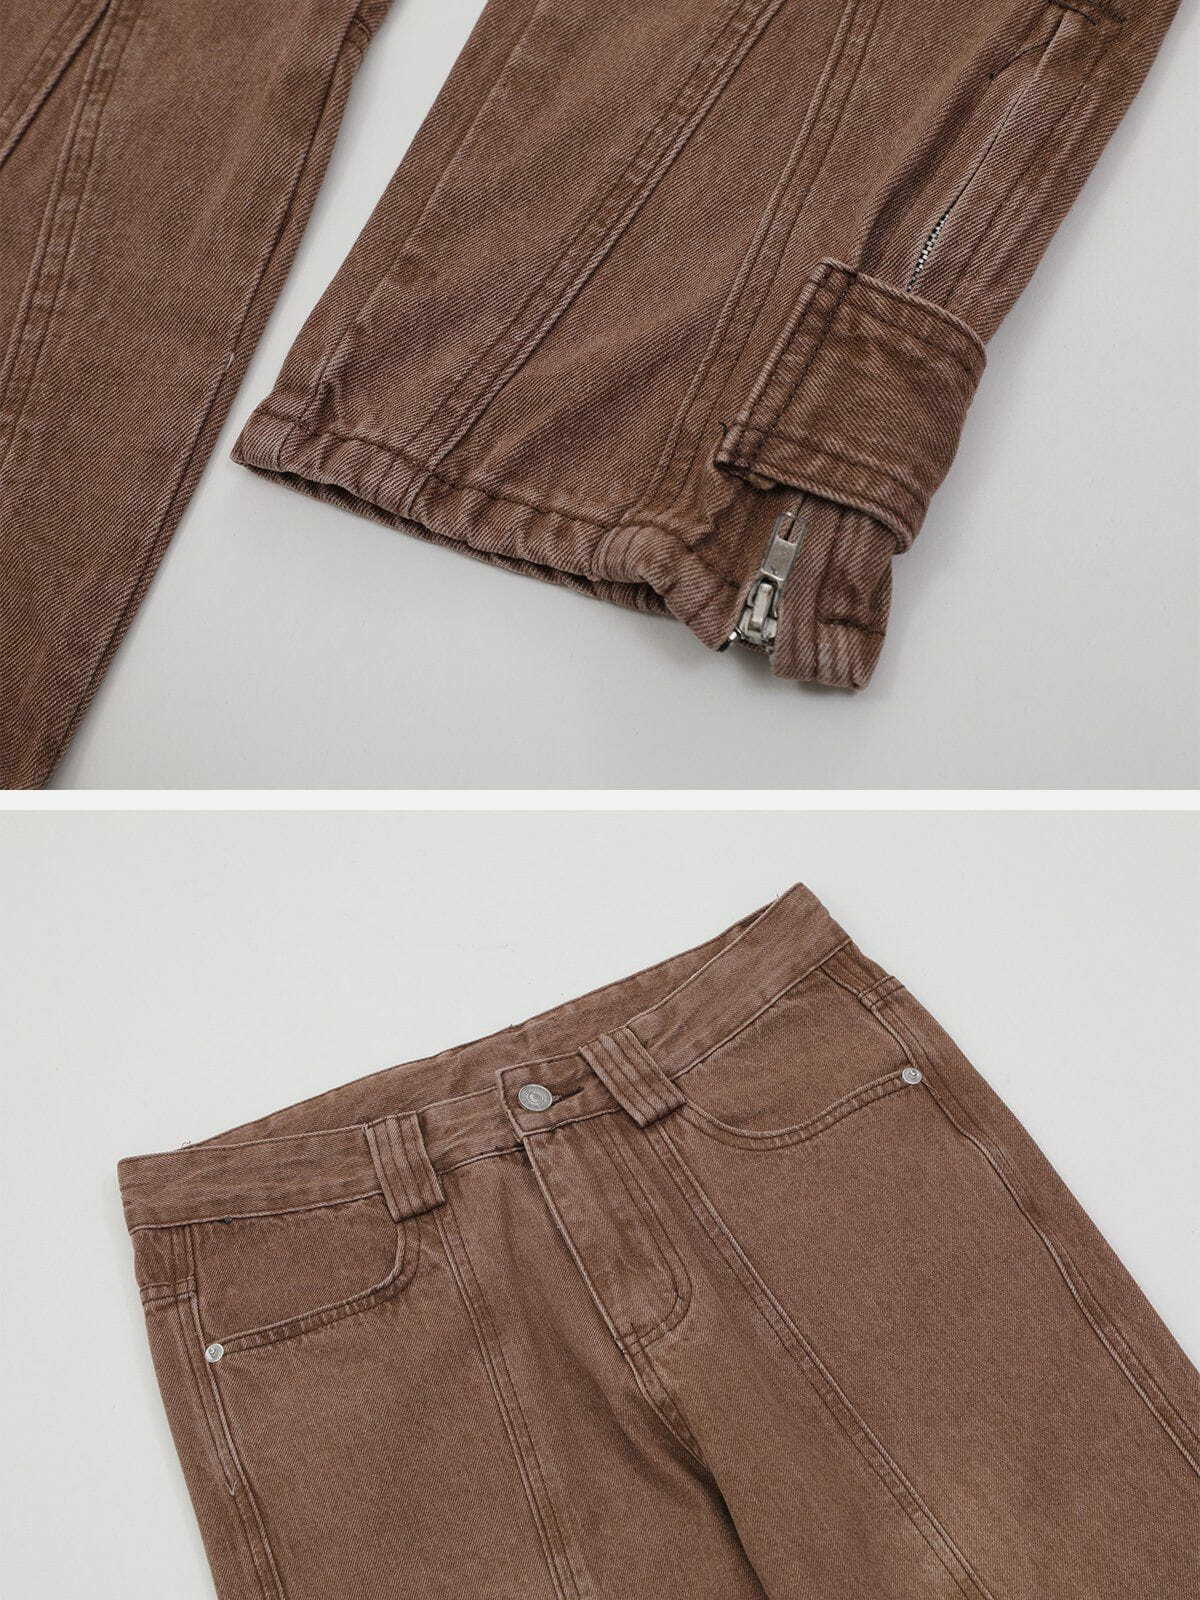 retro line design jeans vintage washed & edgy 7300